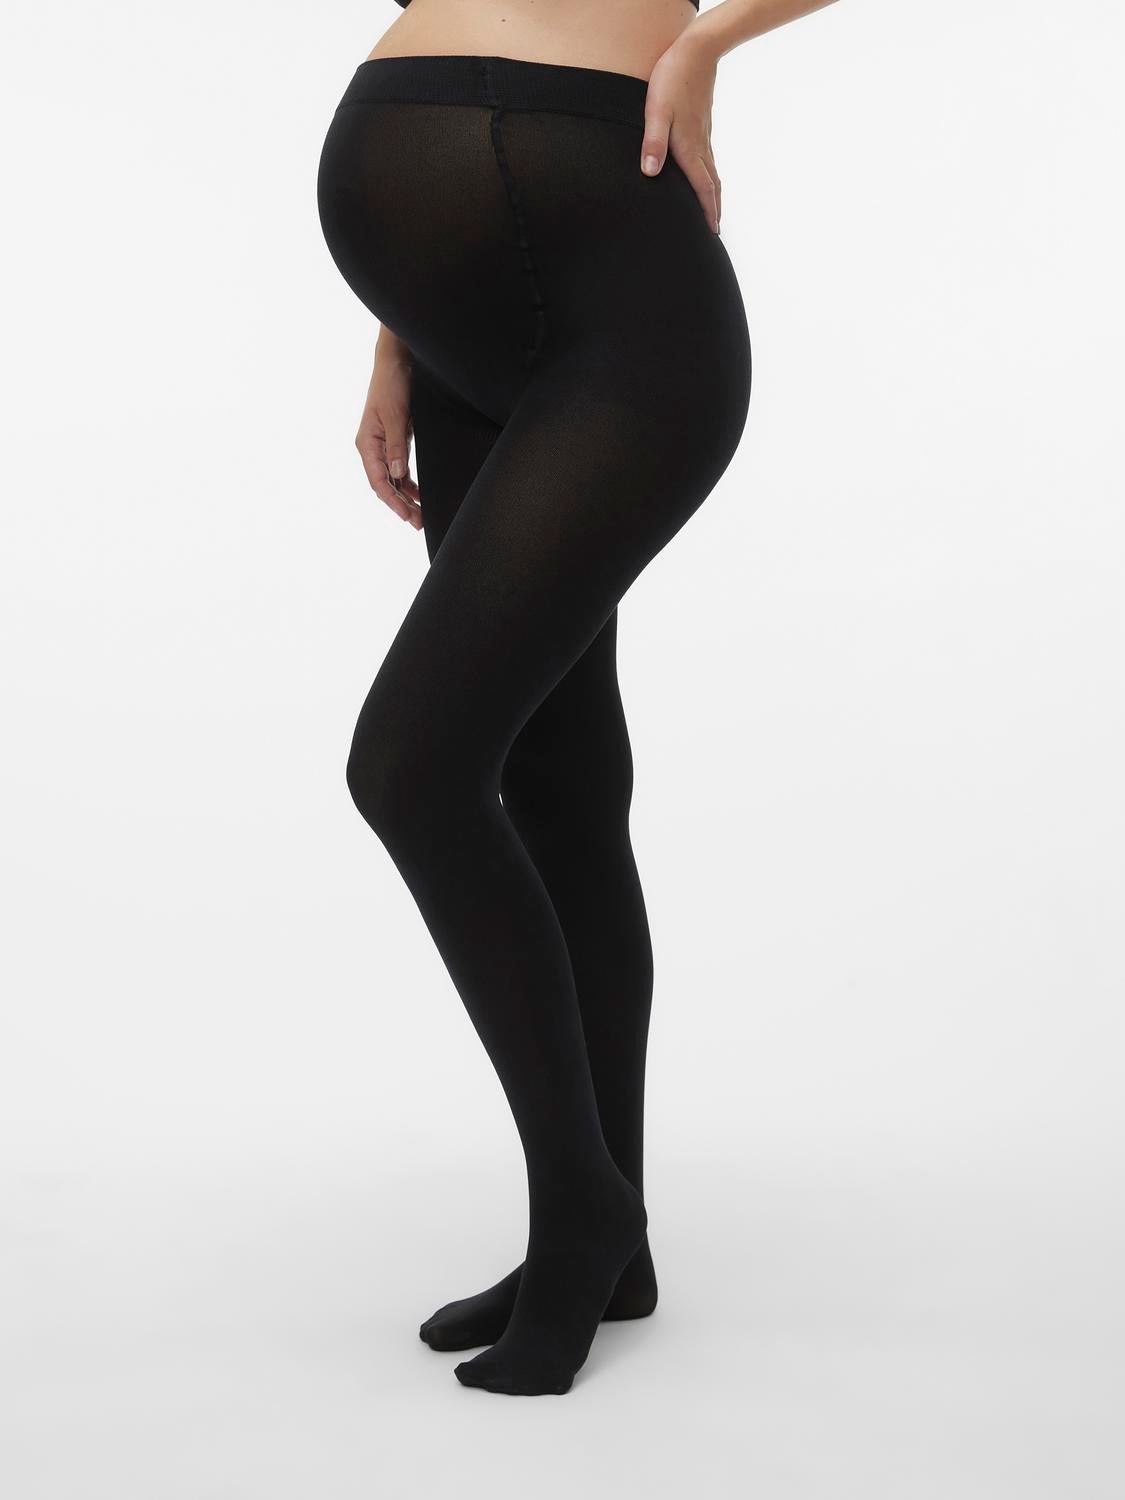 Maternity Black Performance Tights & Leggings.